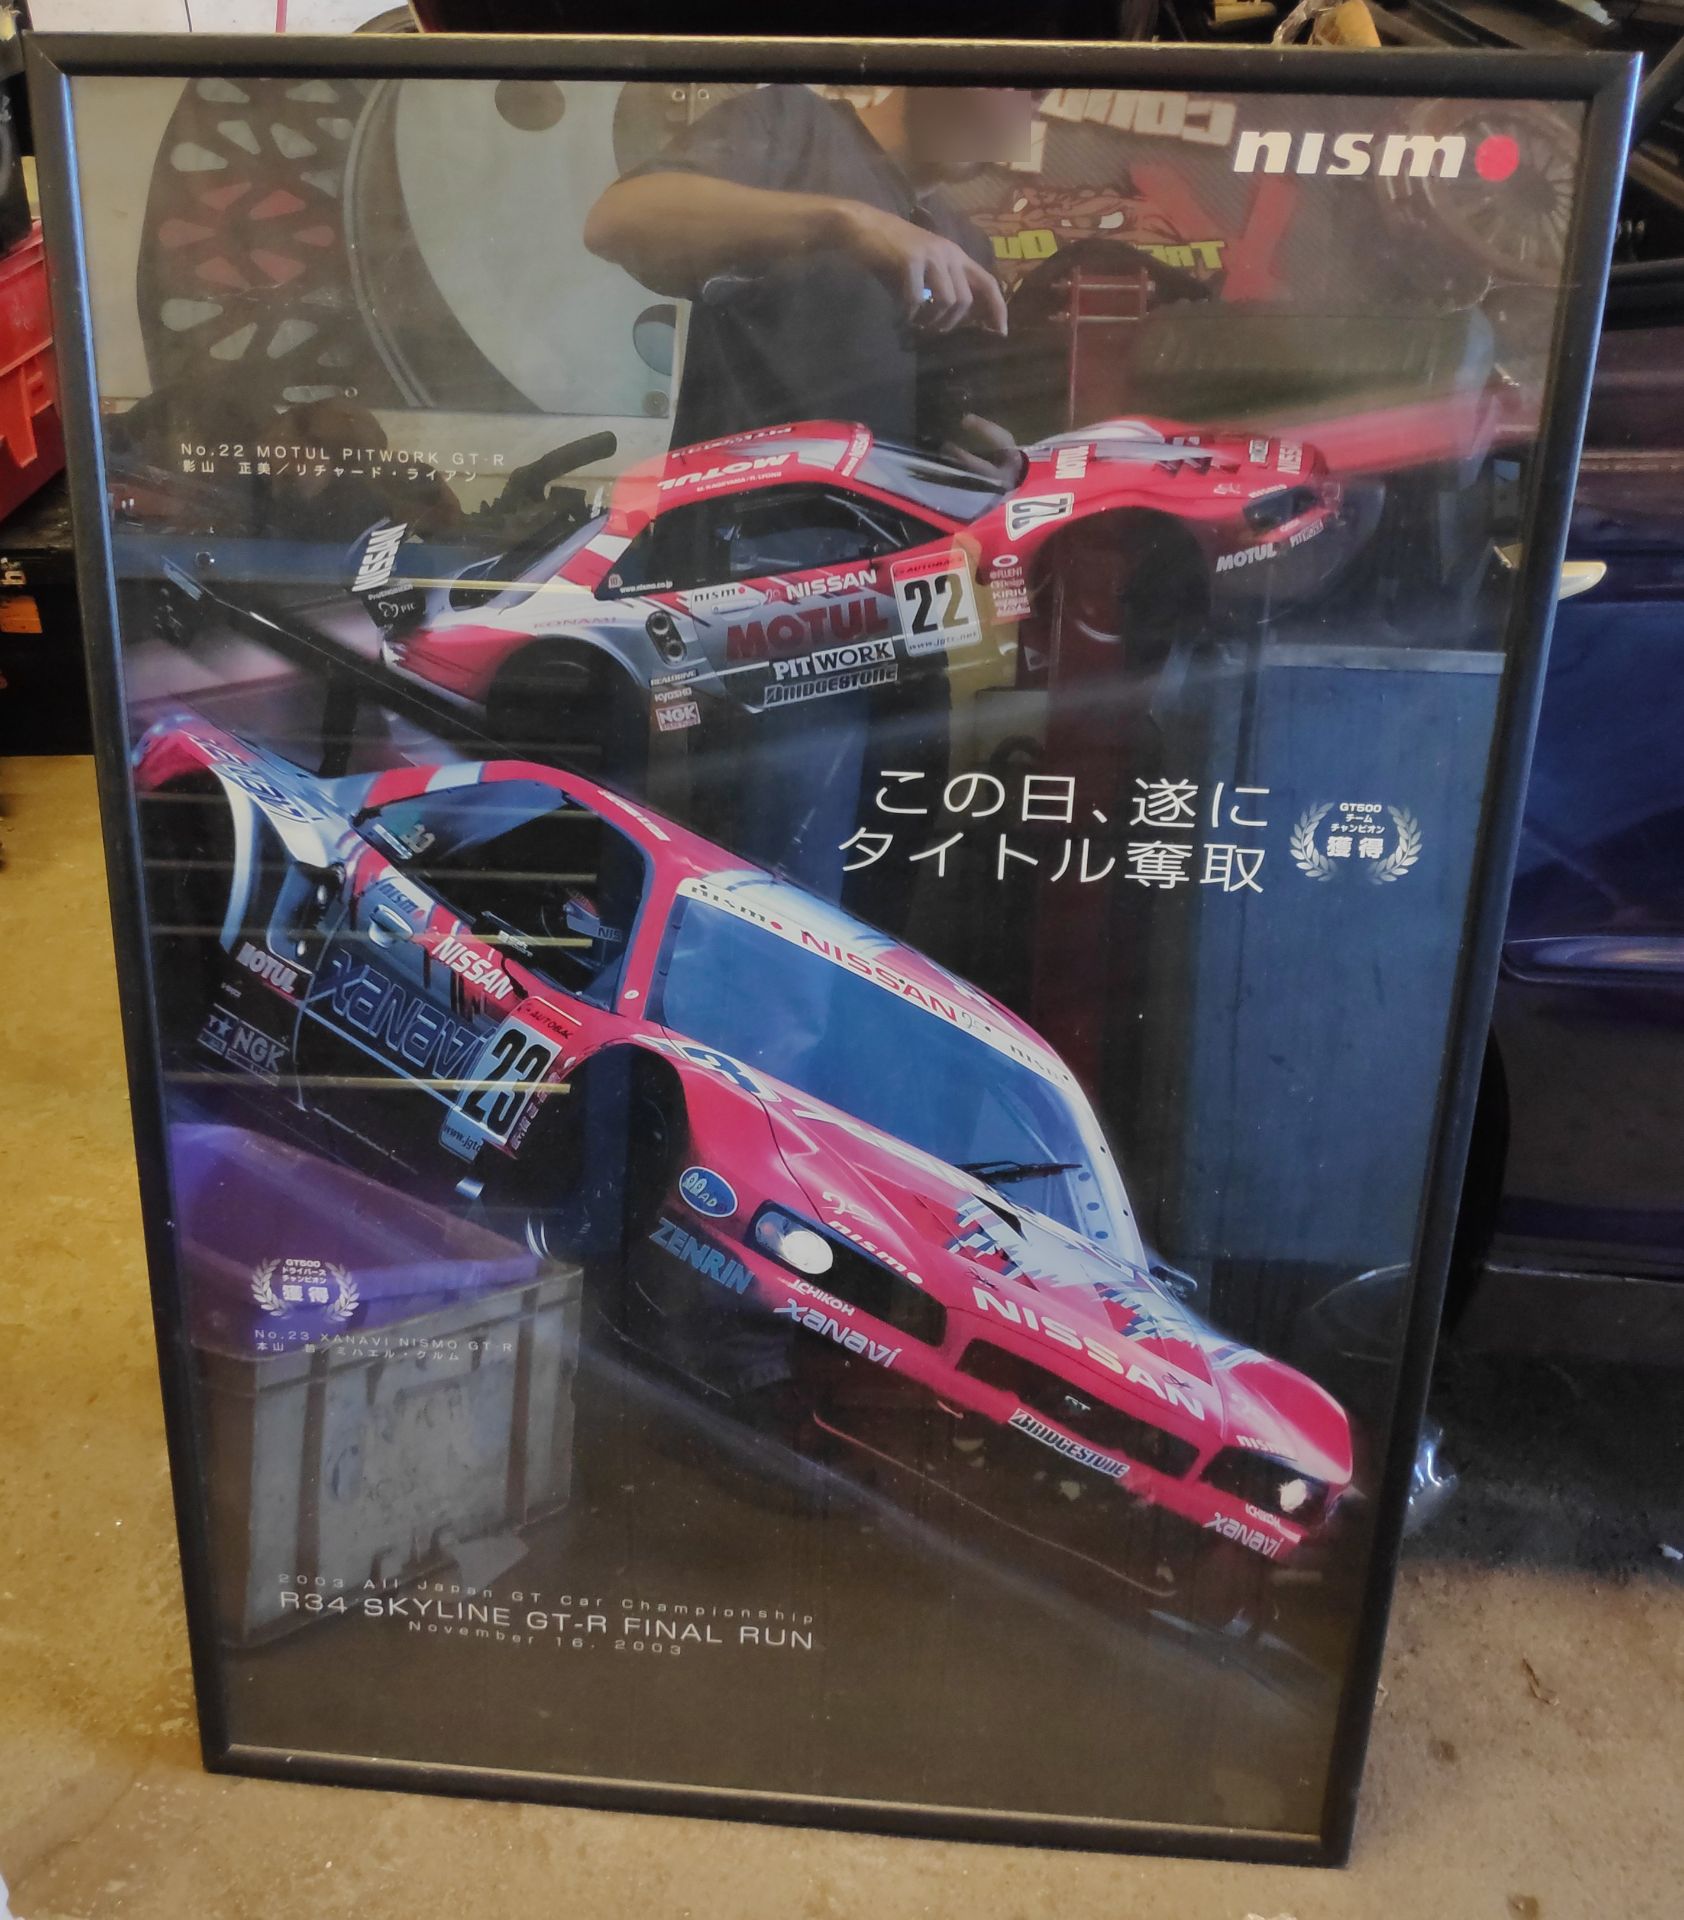 1 x Large Framed Nismo Motul Nissan Skyline R34 GT-R Poster - CL682 - Location: Bedford - Image 5 of 9